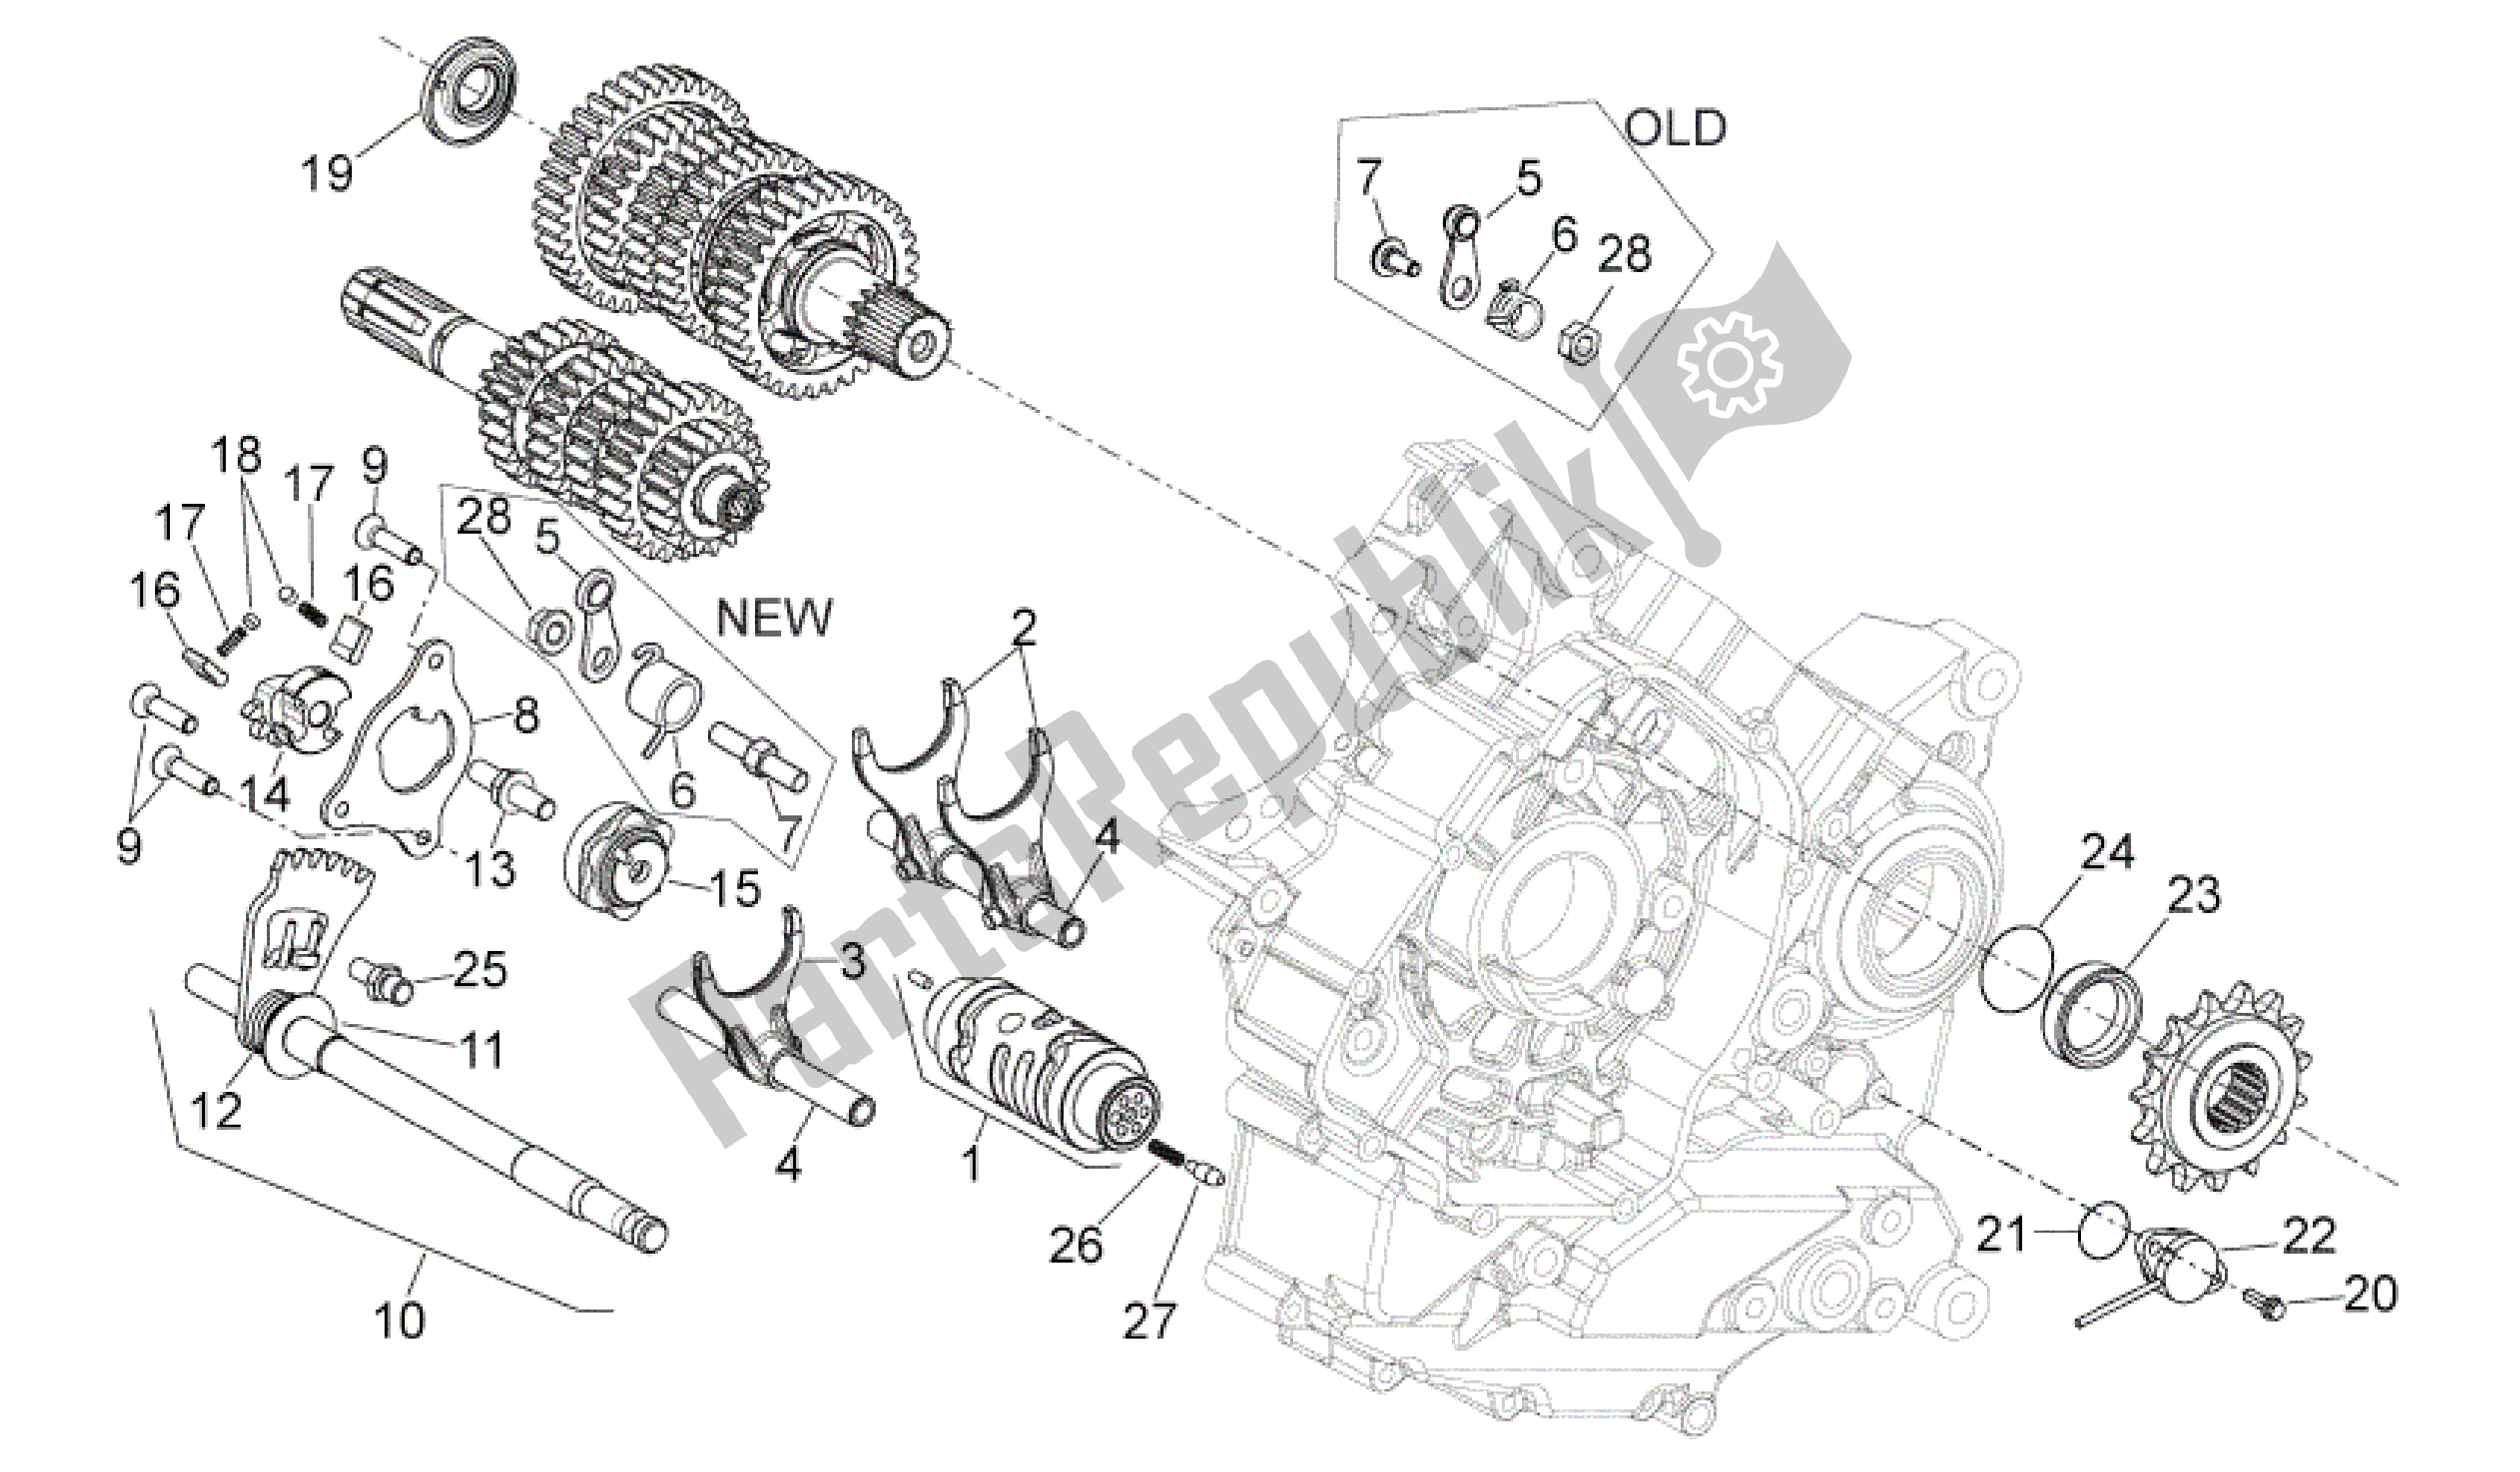 All parts for the Gear Box Selector of the Aprilia Shiver 750 2009